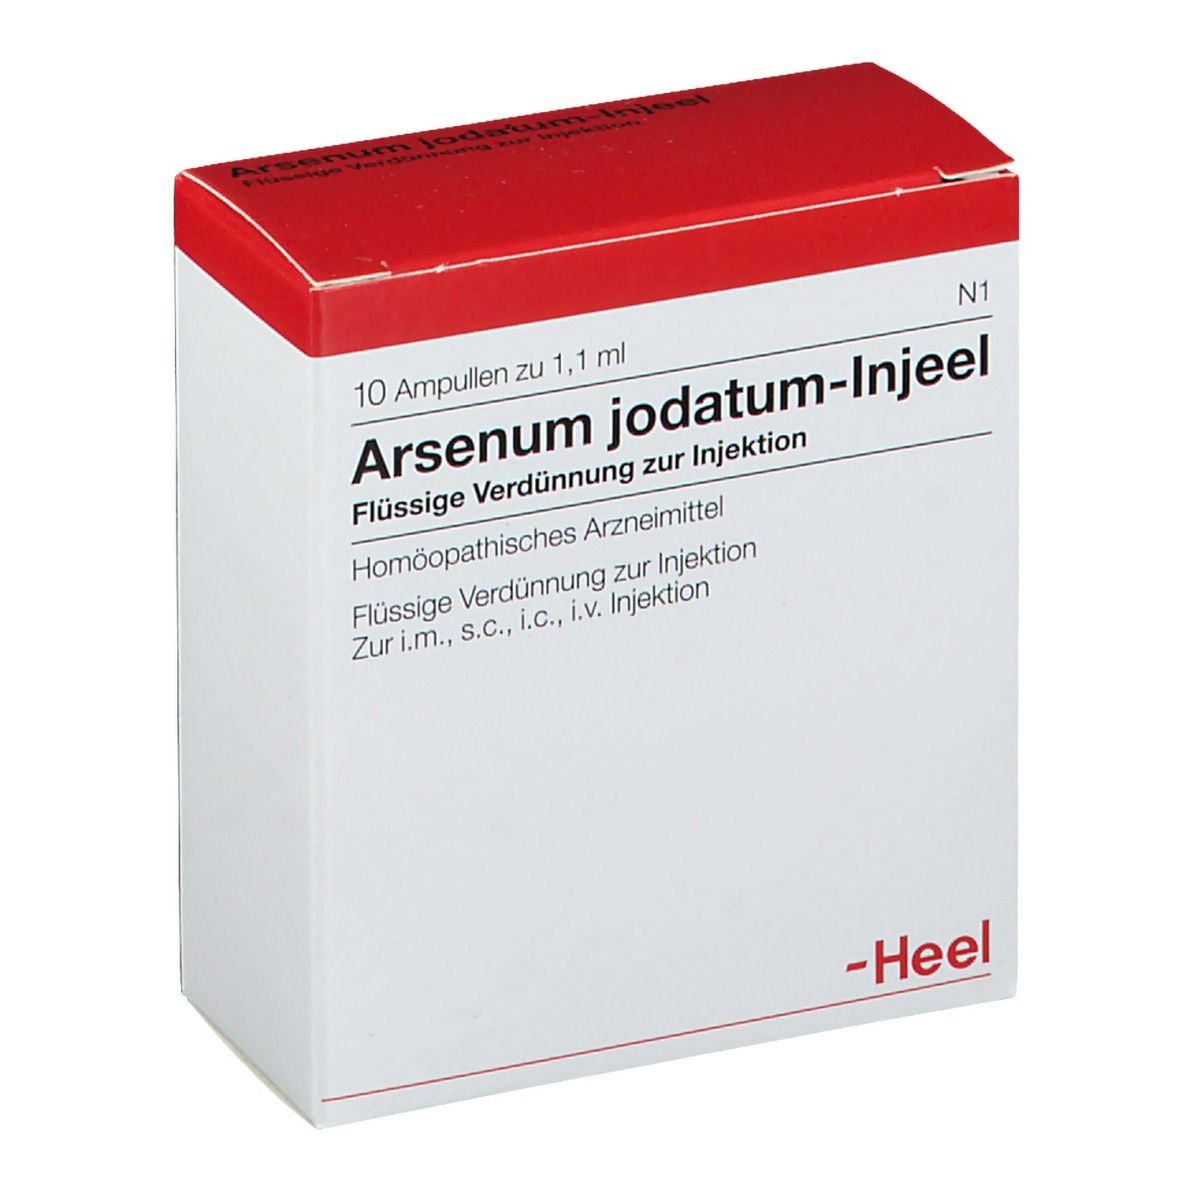 Arsenum jodatum-Injeel® Ampullen